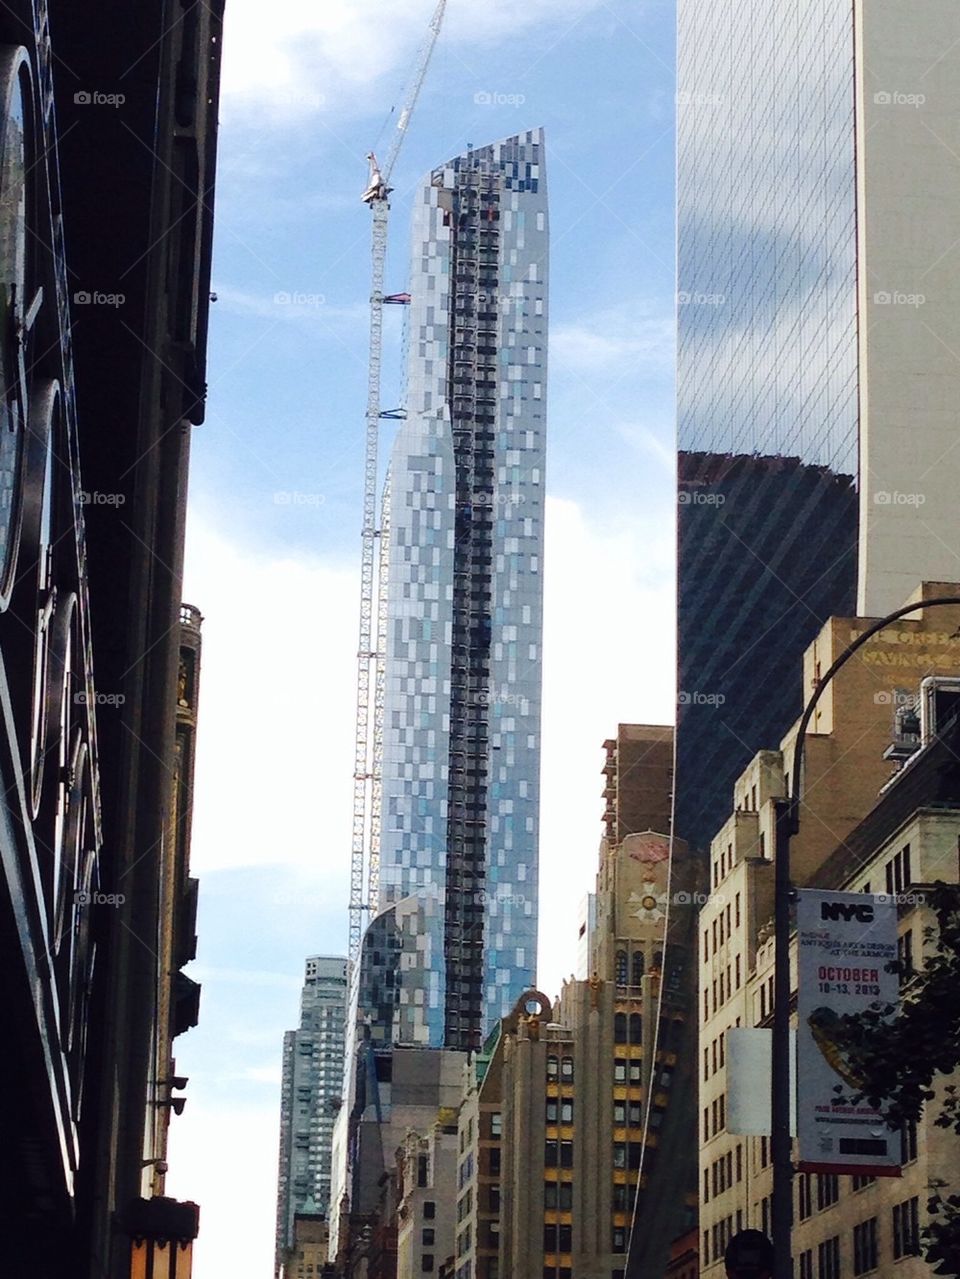 New York City building